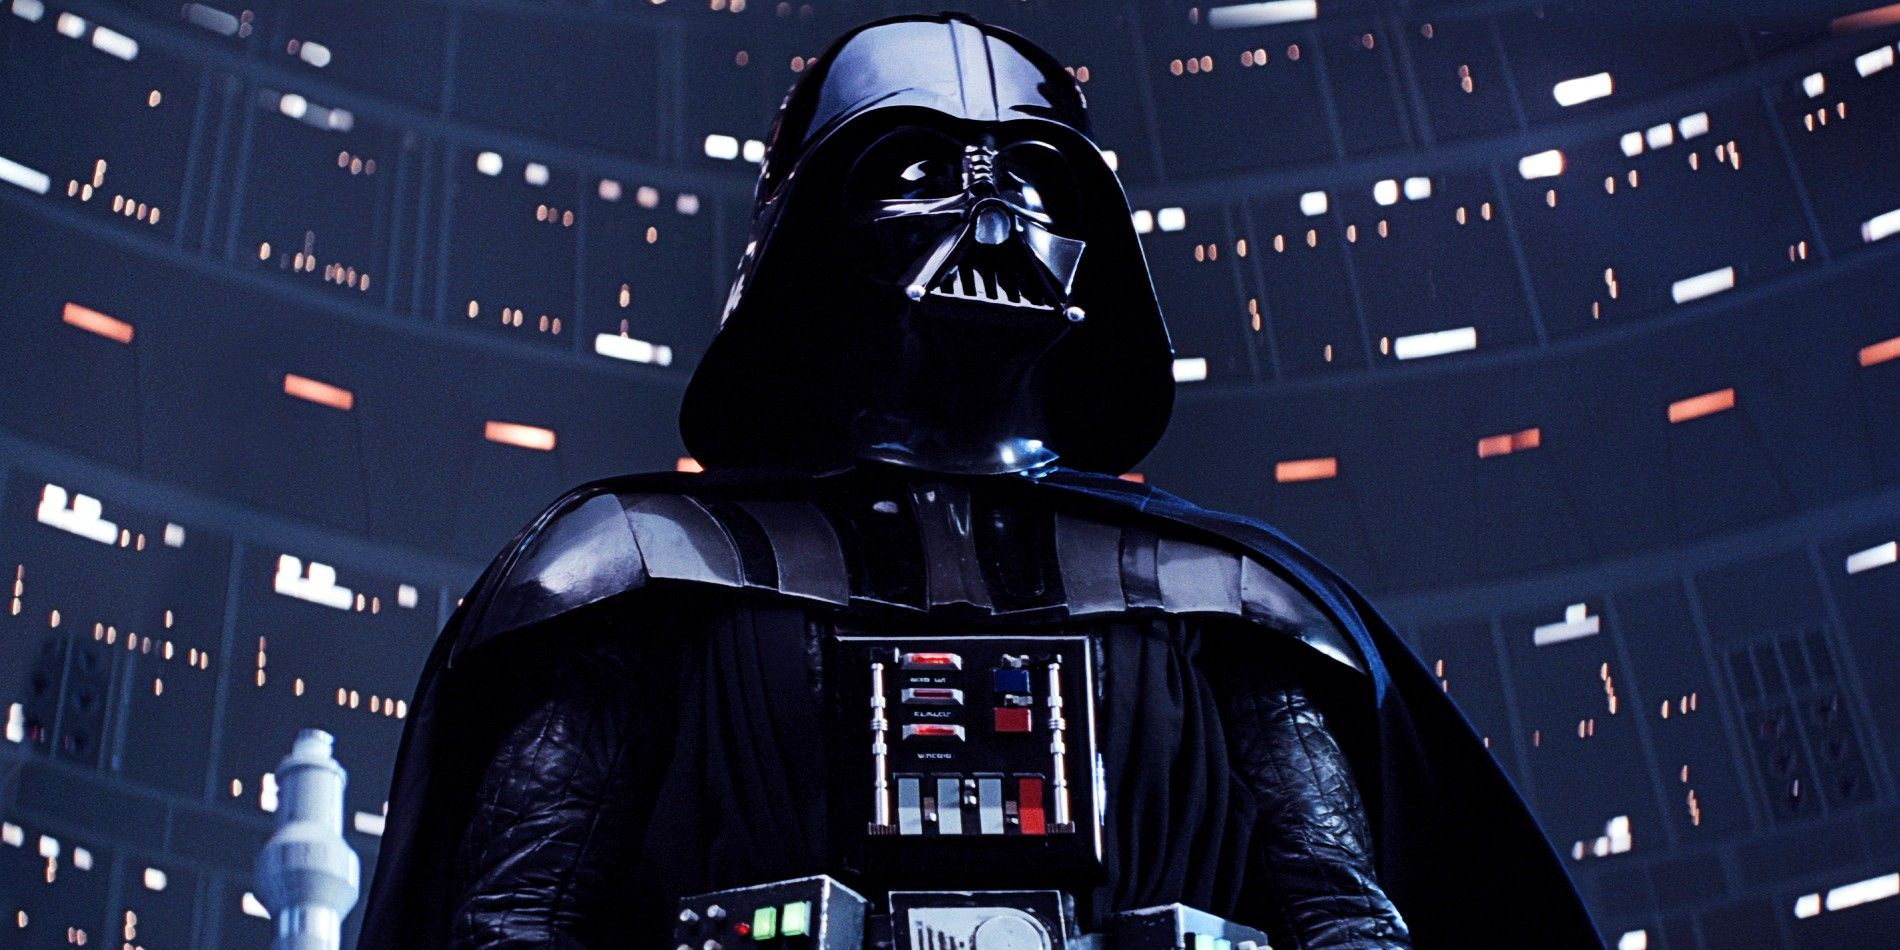 Darth Vader in The Empire Strikes Back